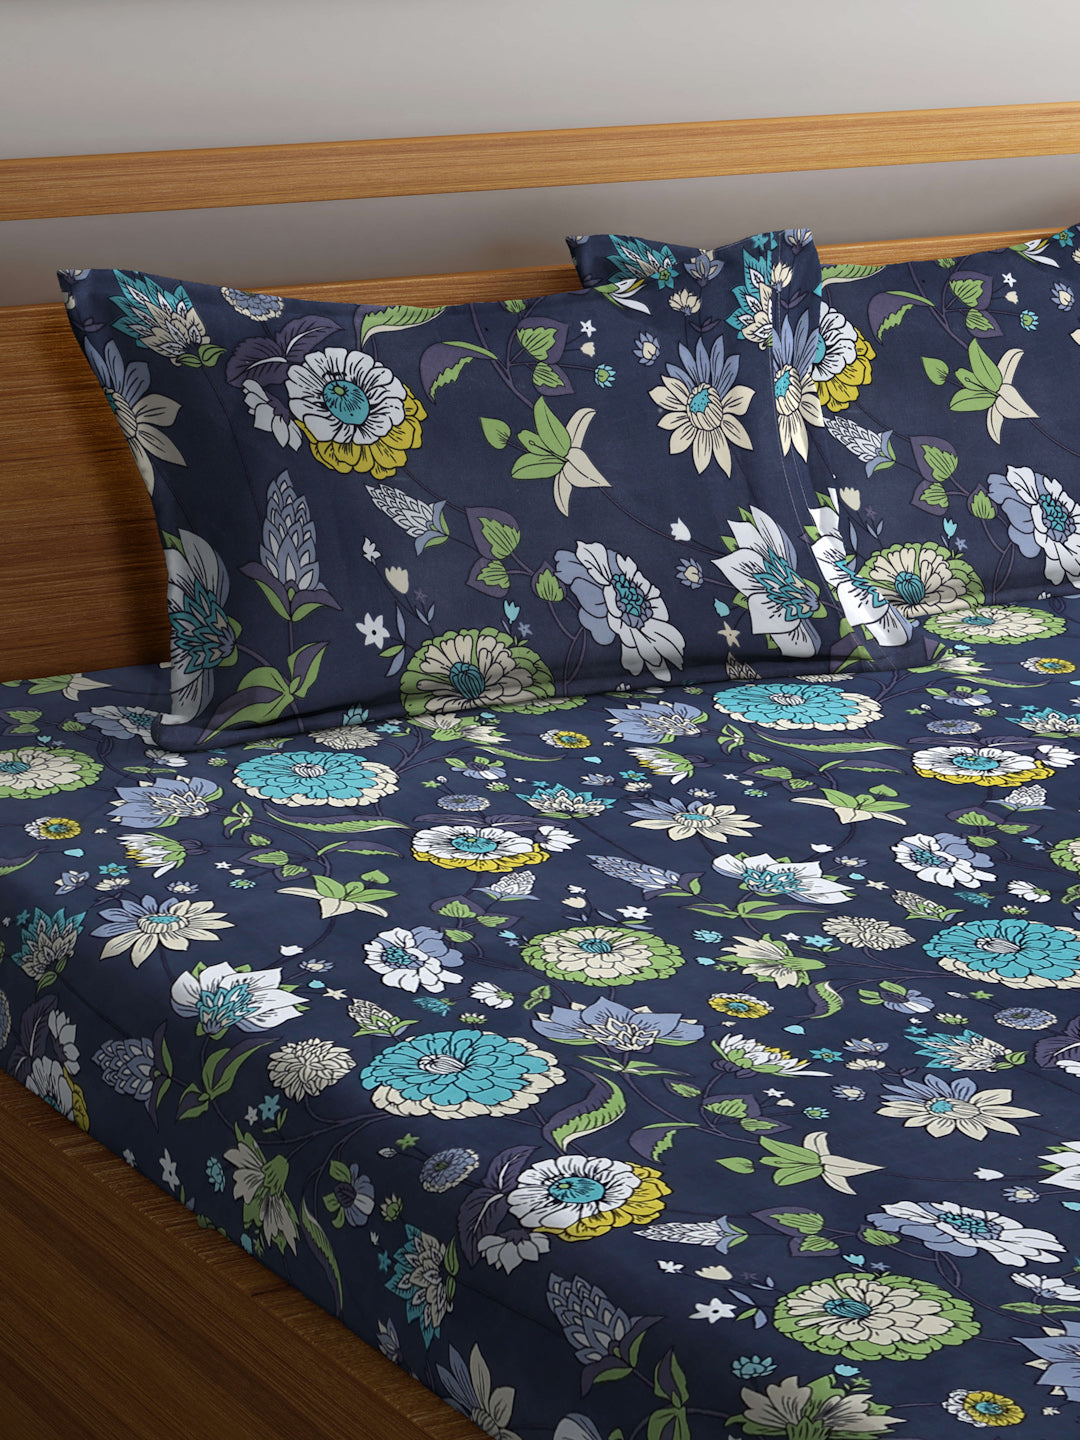 Arrabi Grey Floral TC Cotton Blend Super King Size Bedsheet with 2 Pillow Covers (270 X 260 cm)